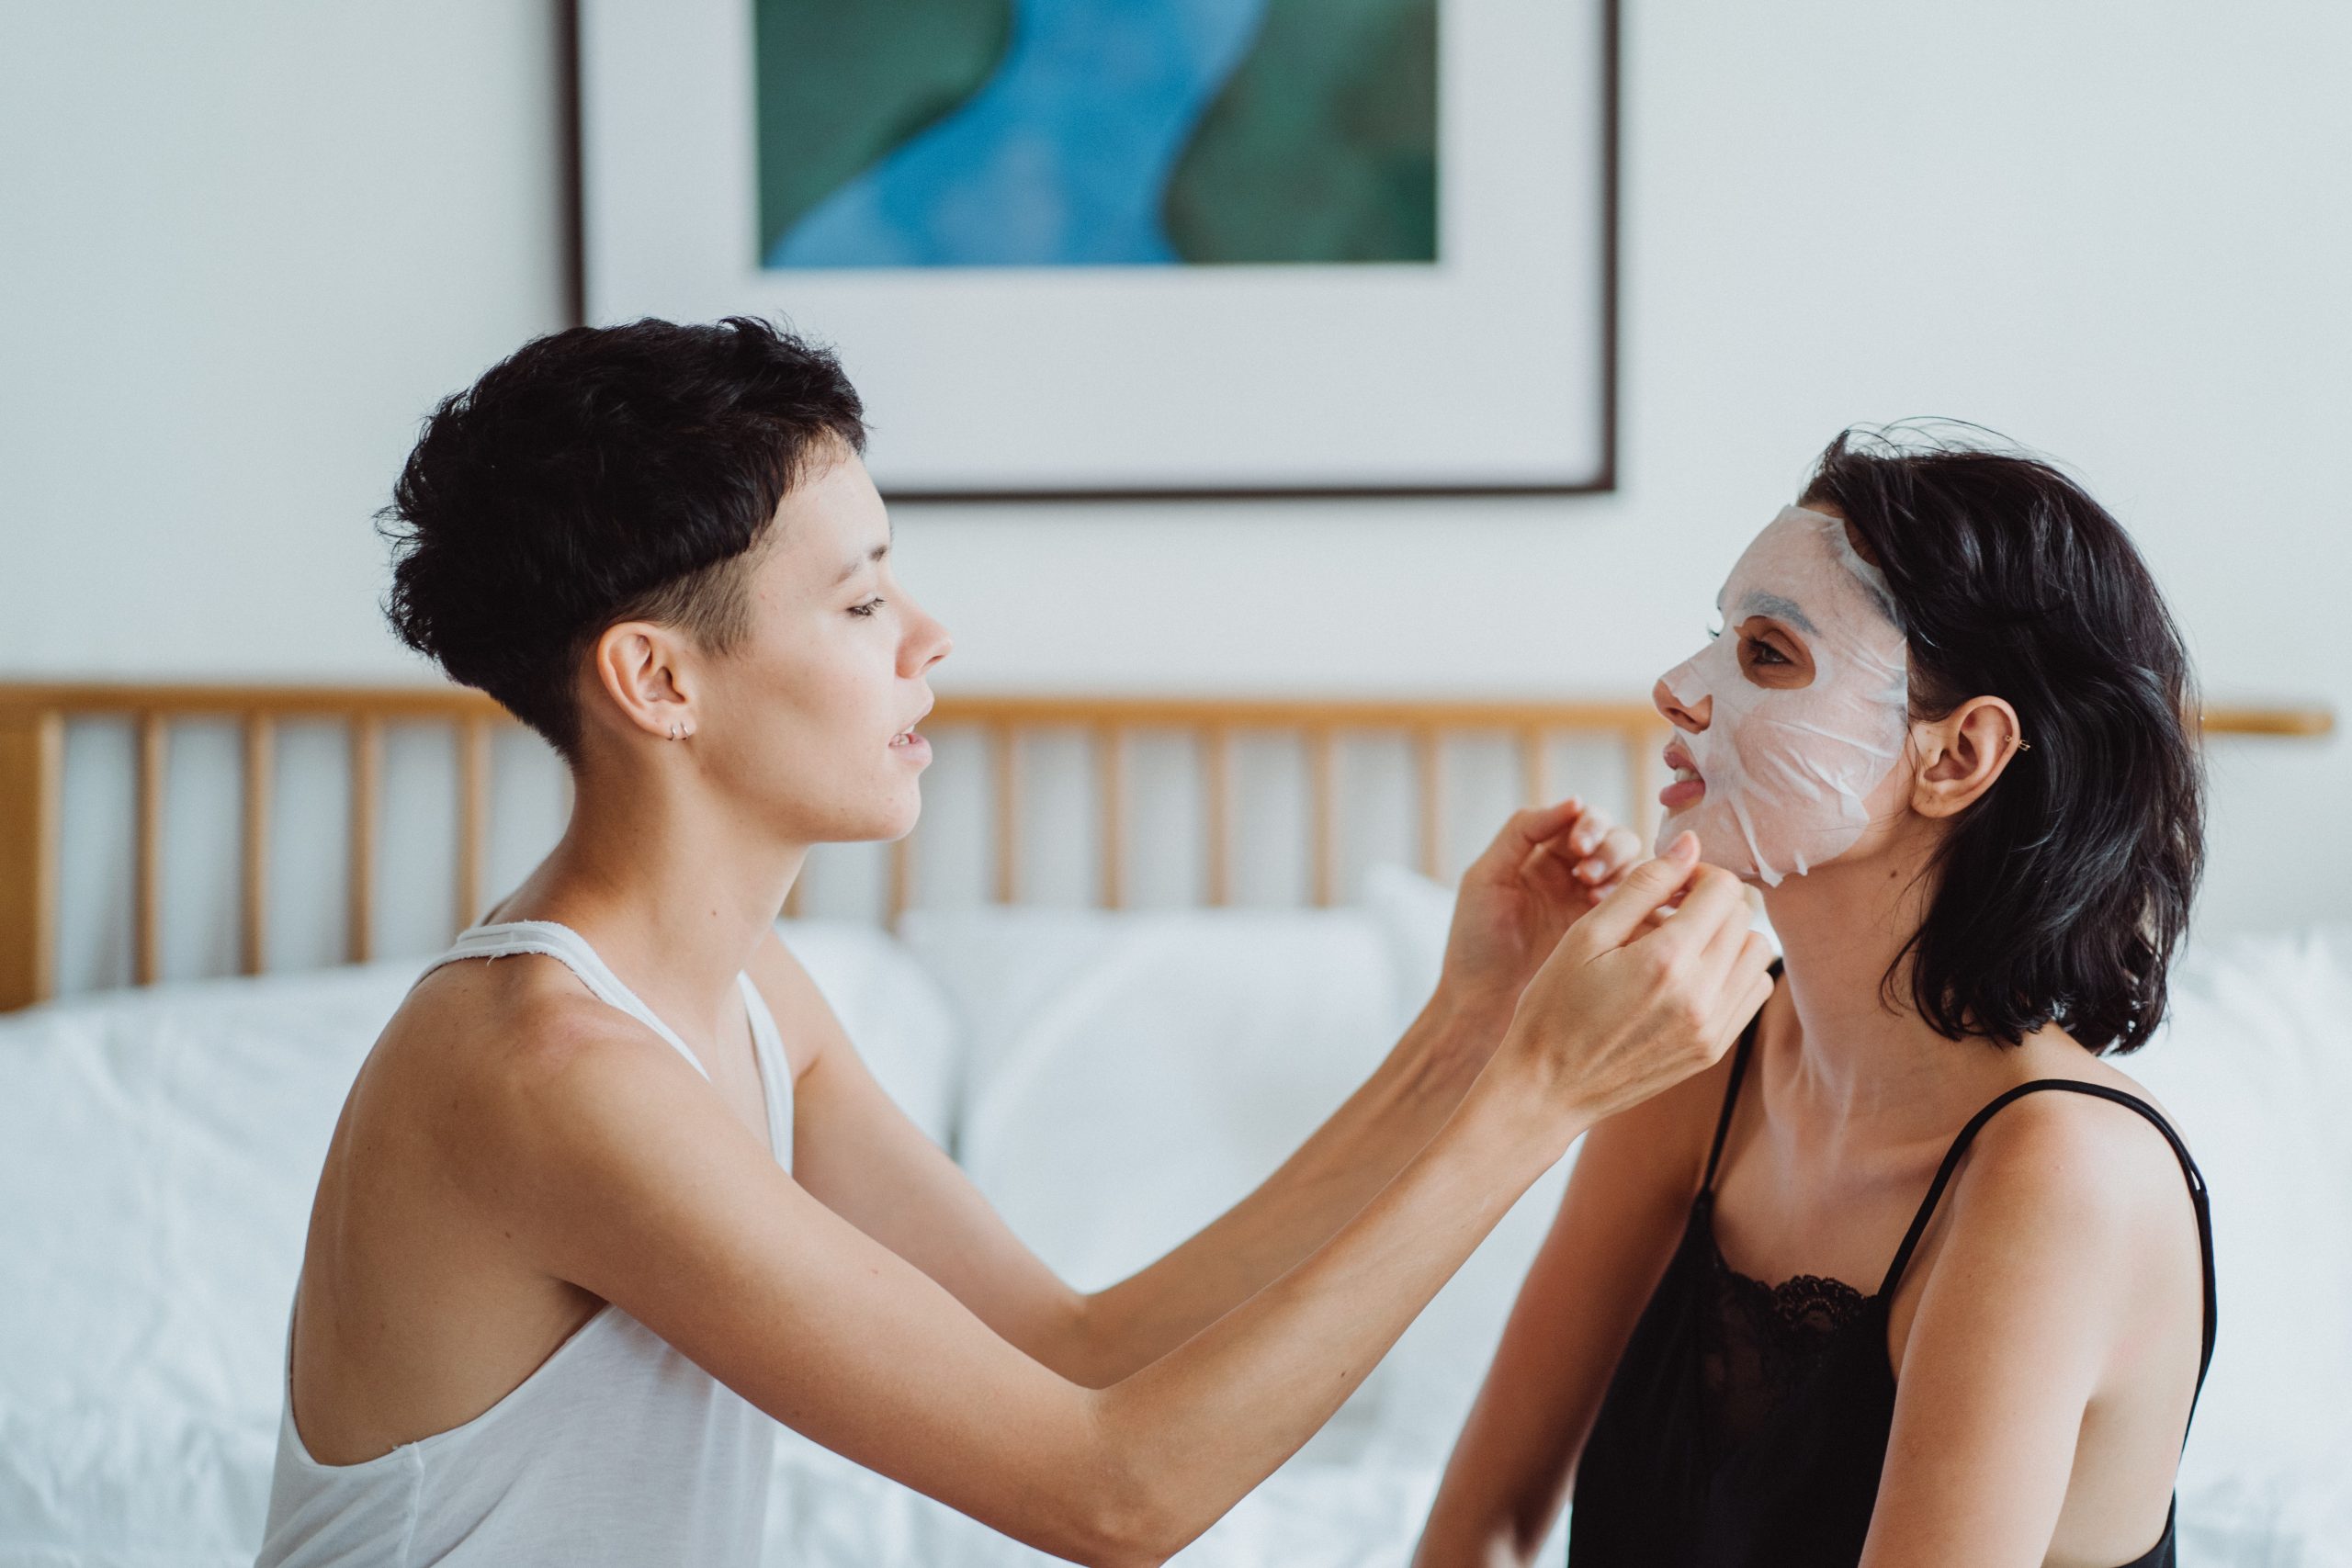 A young woman helps her friend apply a Garneir Sheet mask from the Garnier Sheet Masks Self-Care Collection.